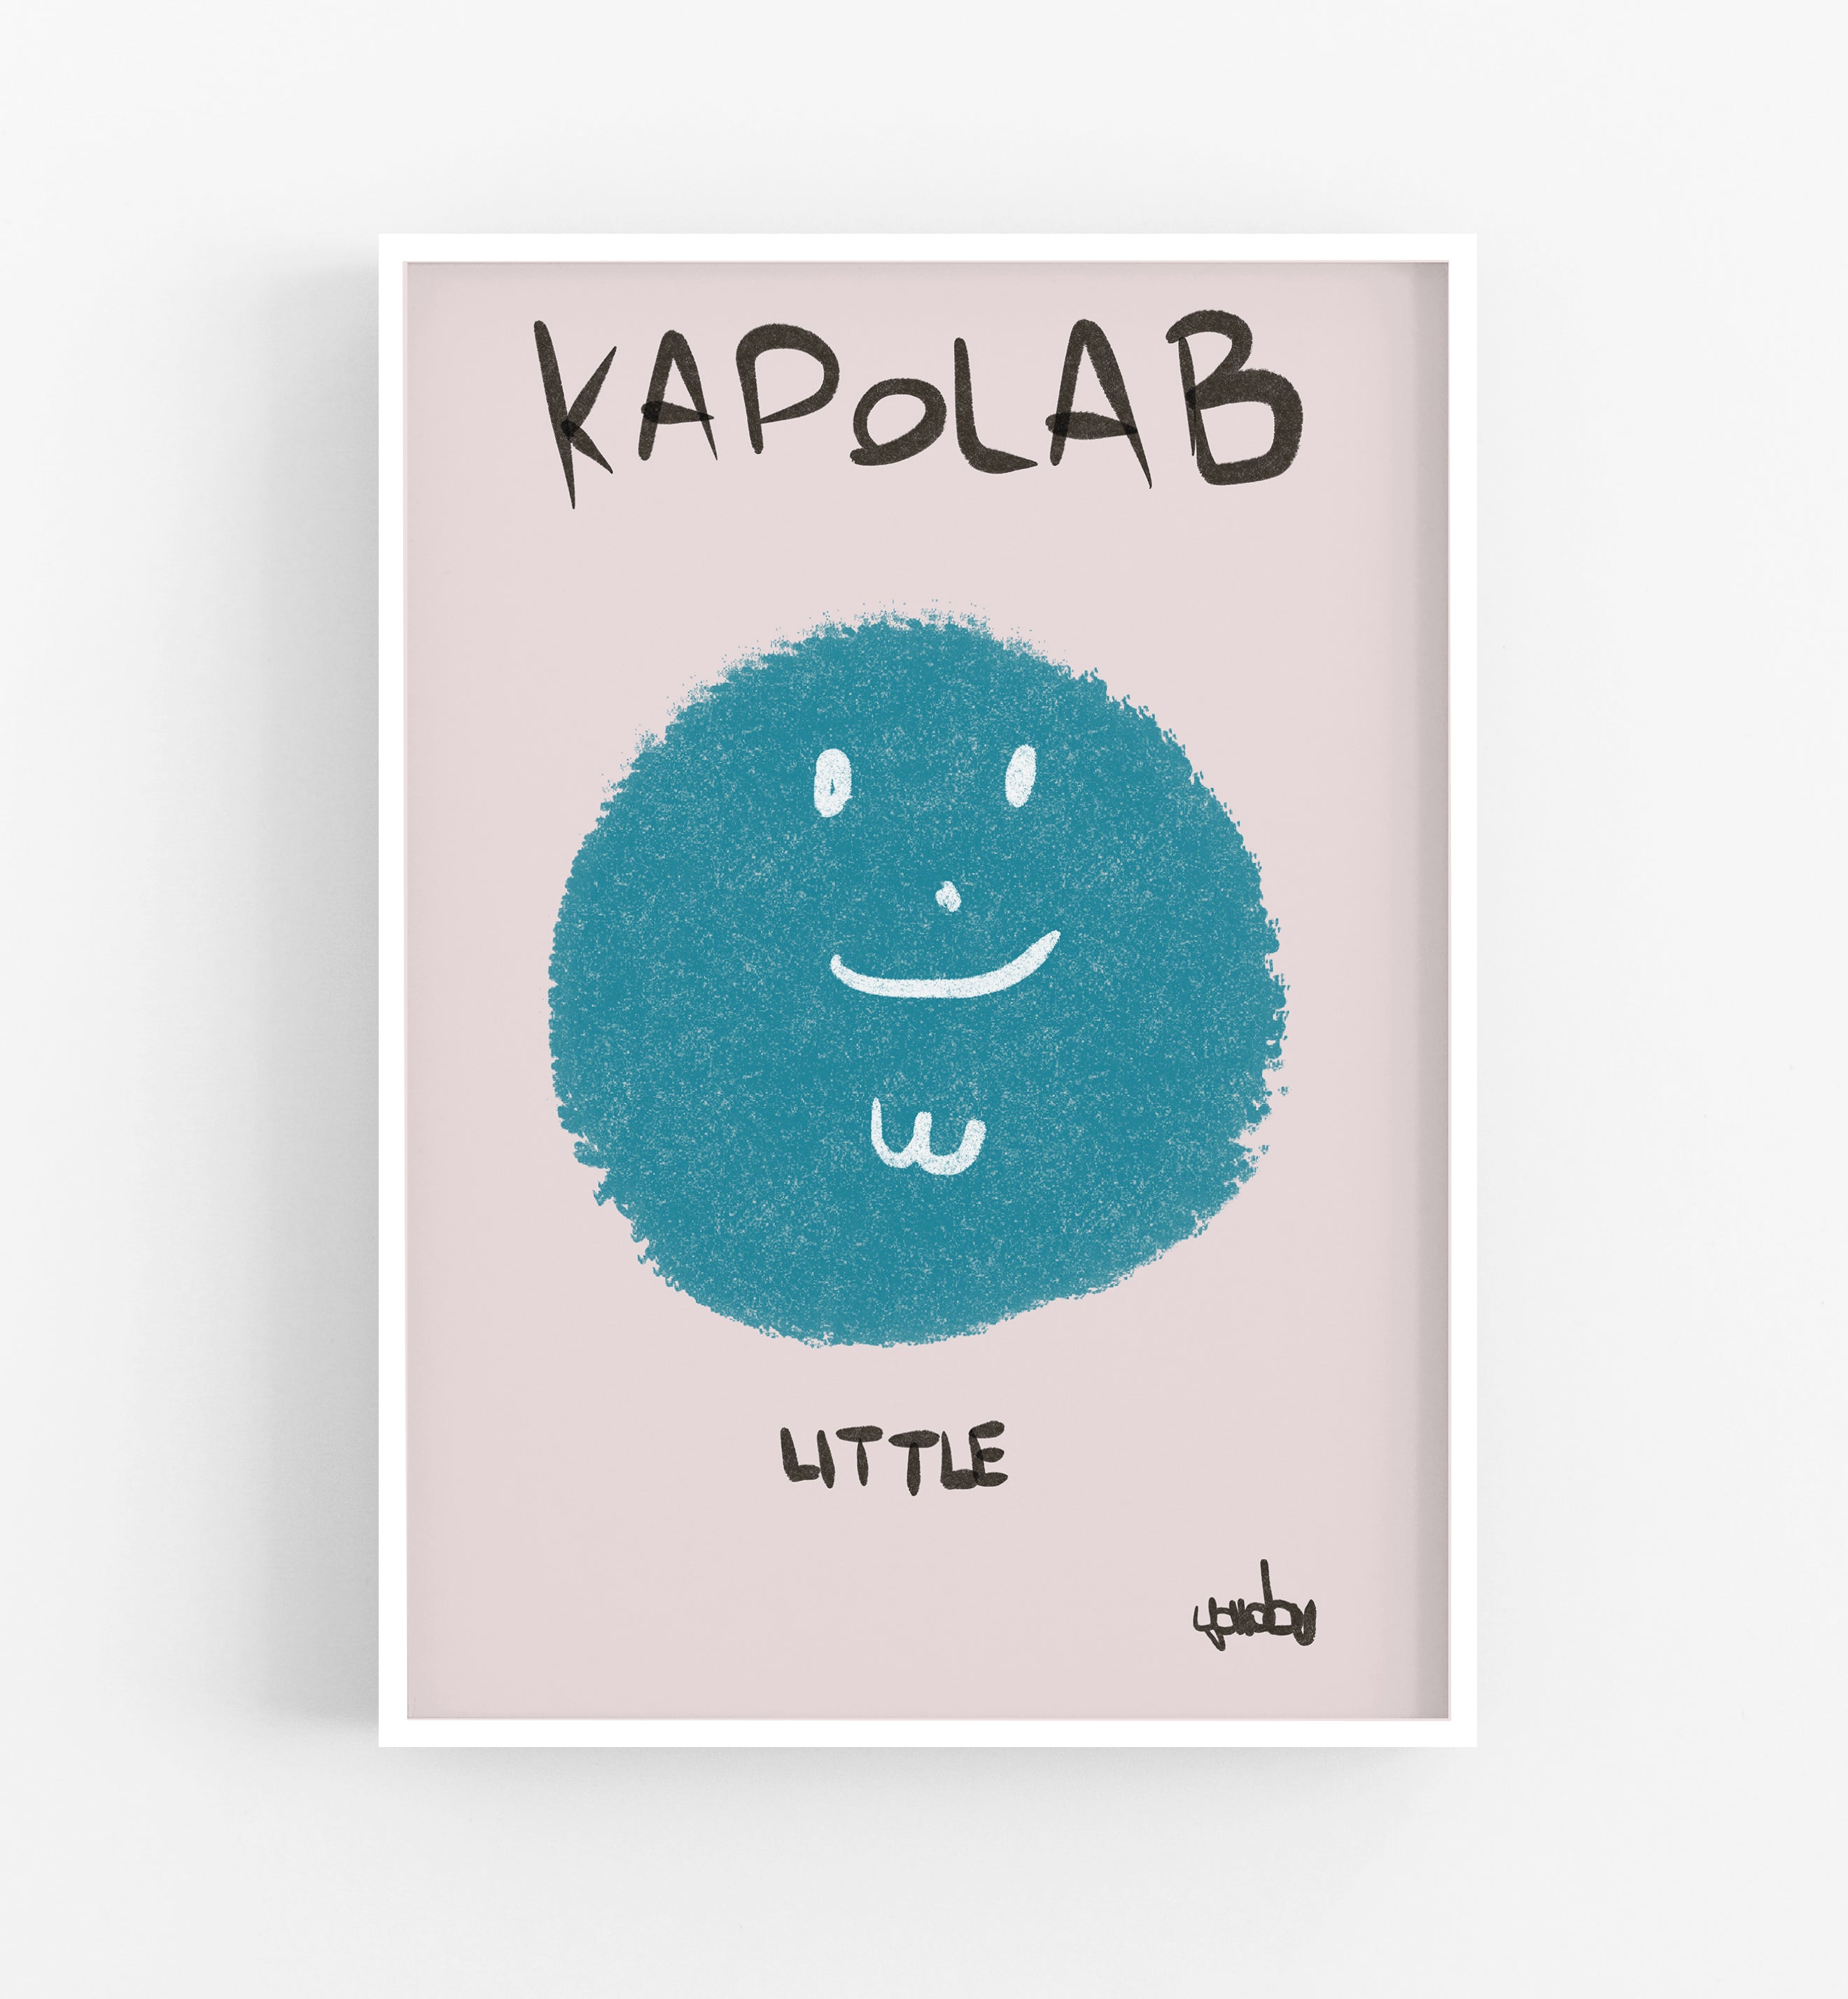 Little KapoLab